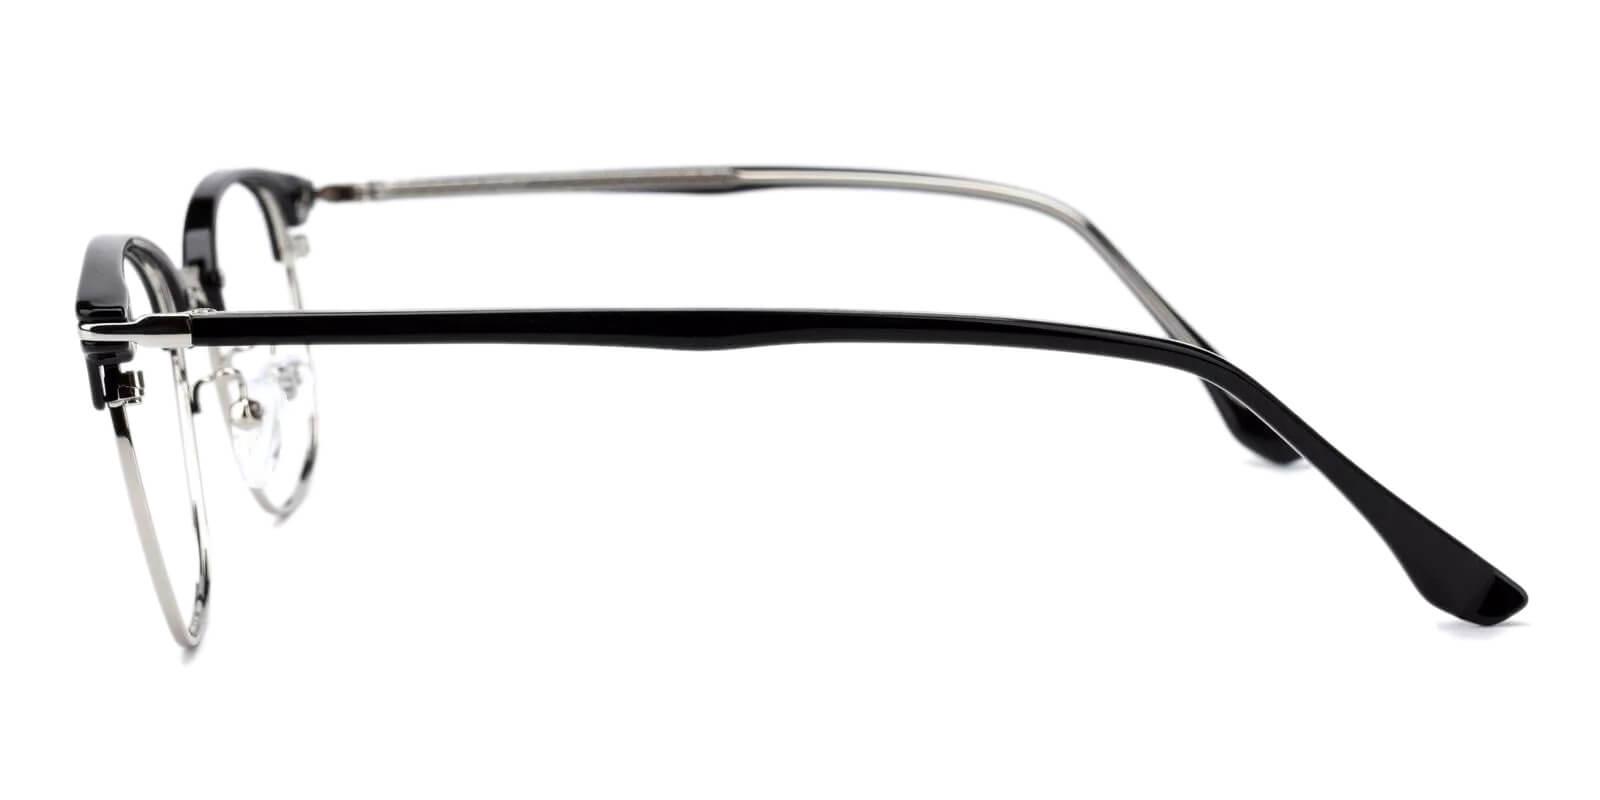 Tristan Black Metal Eyeglasses , Fashion , NosePads Frames from ABBE Glasses